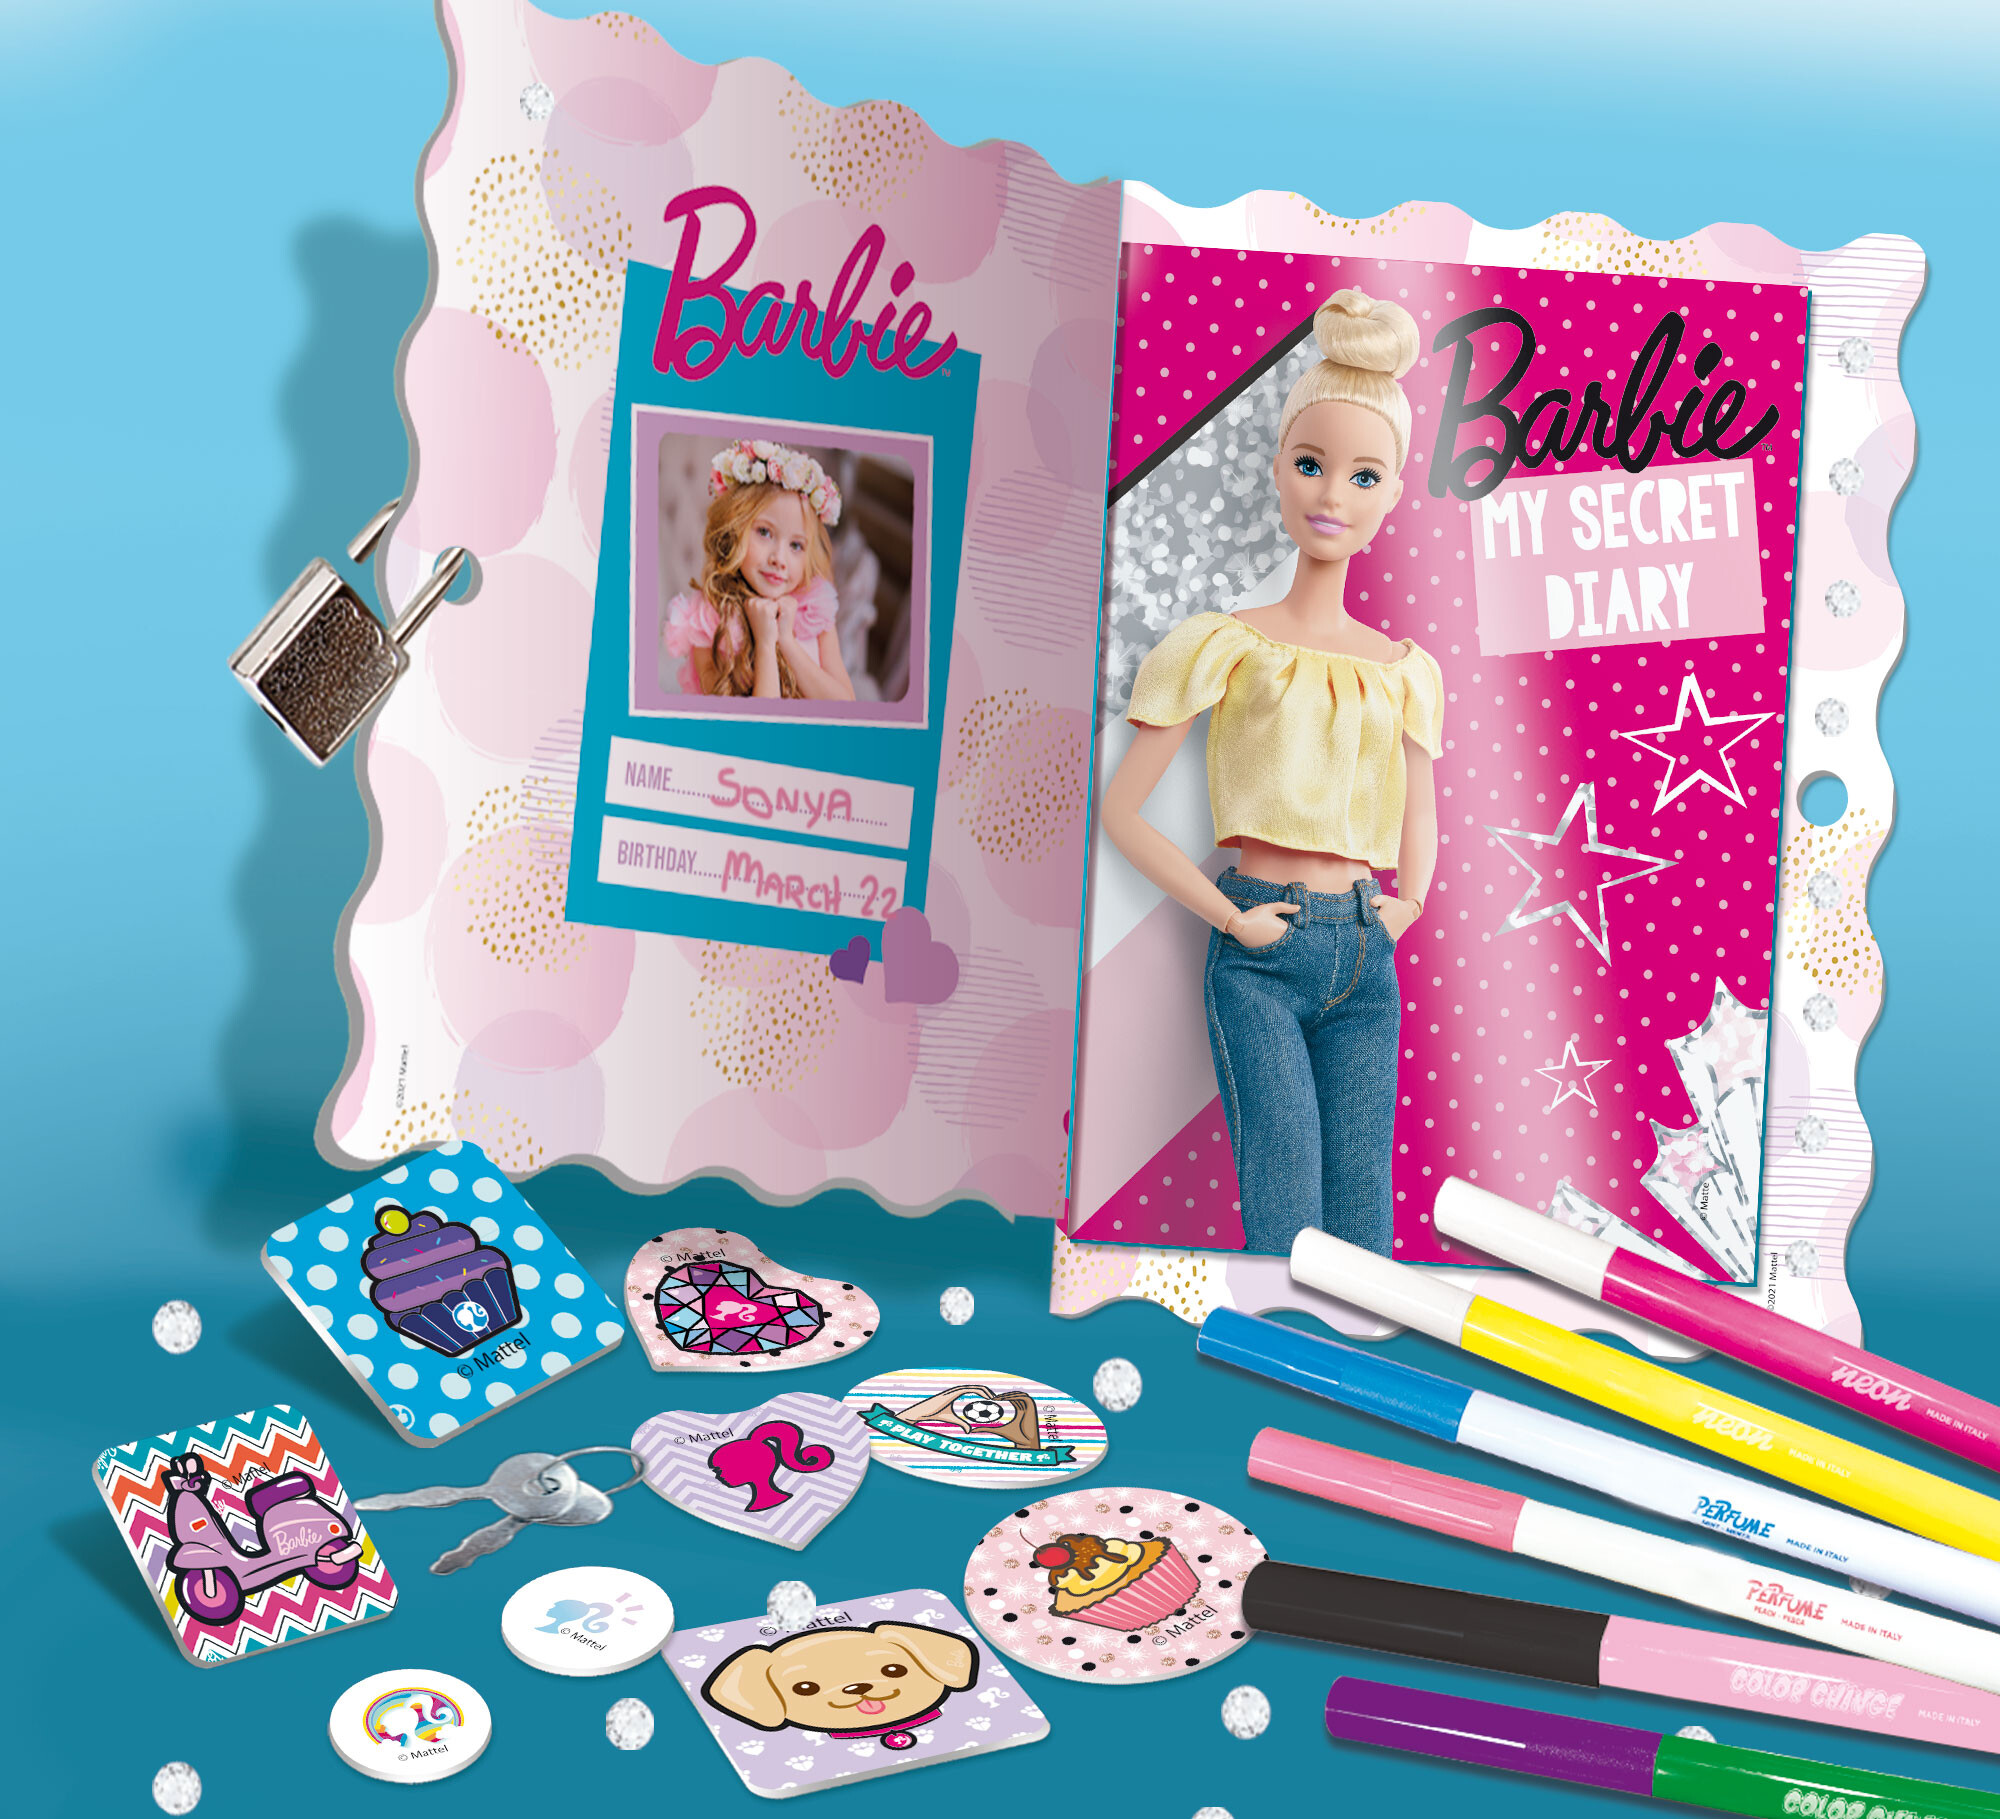 Barbie my secret diary+lucchetto - LISCIANI, Barbie